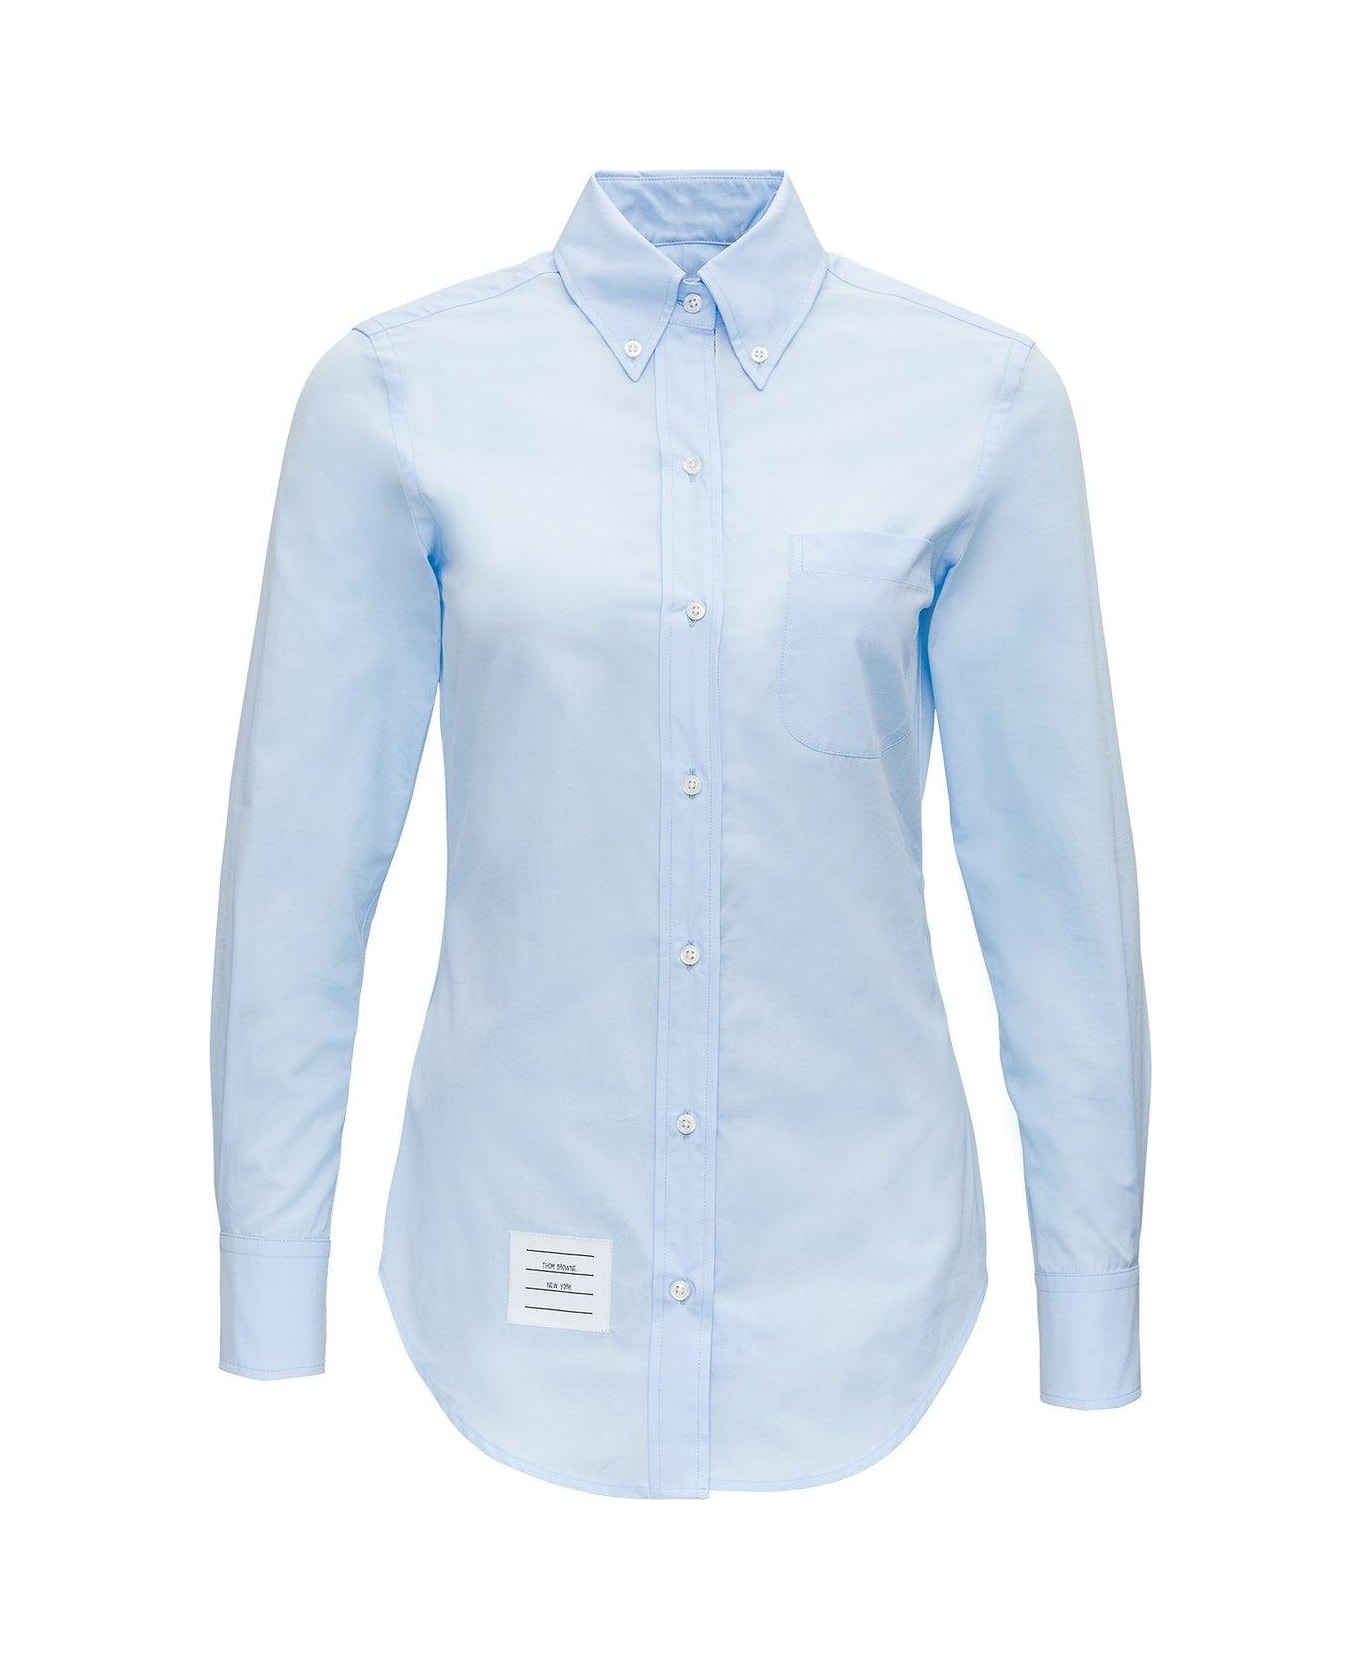 Thom Browne Slim Fit Shirt - Light blue